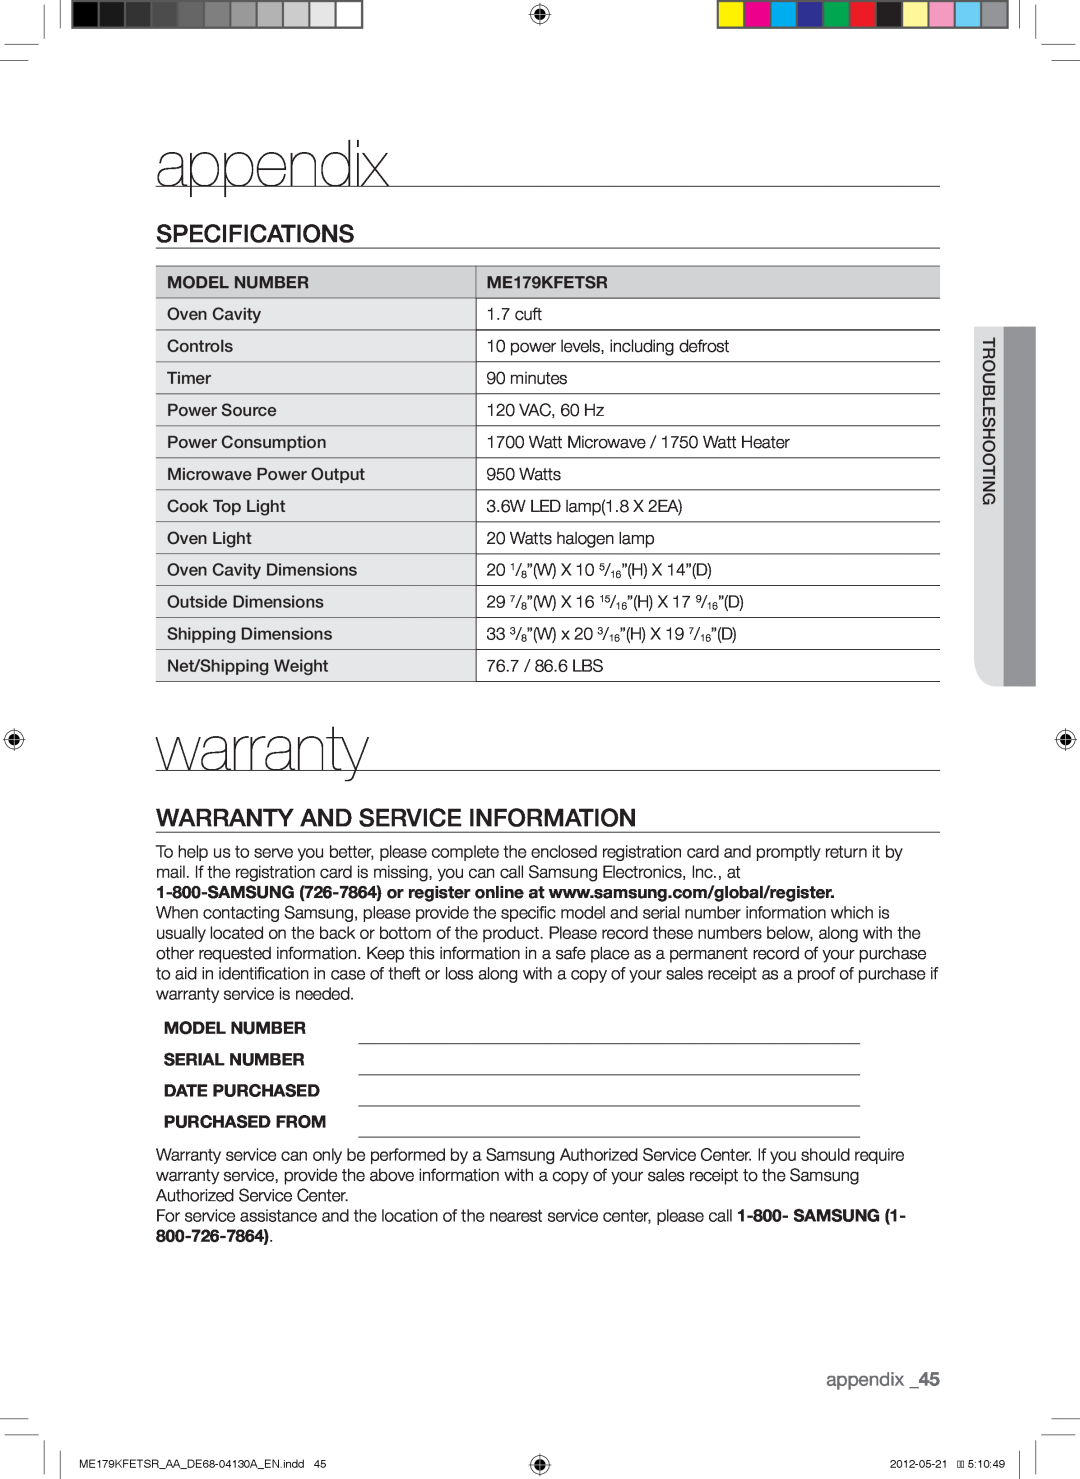 Samsung ME179KFETSR user manual appendix, warranty, Specifications, Warranty And Service Information 